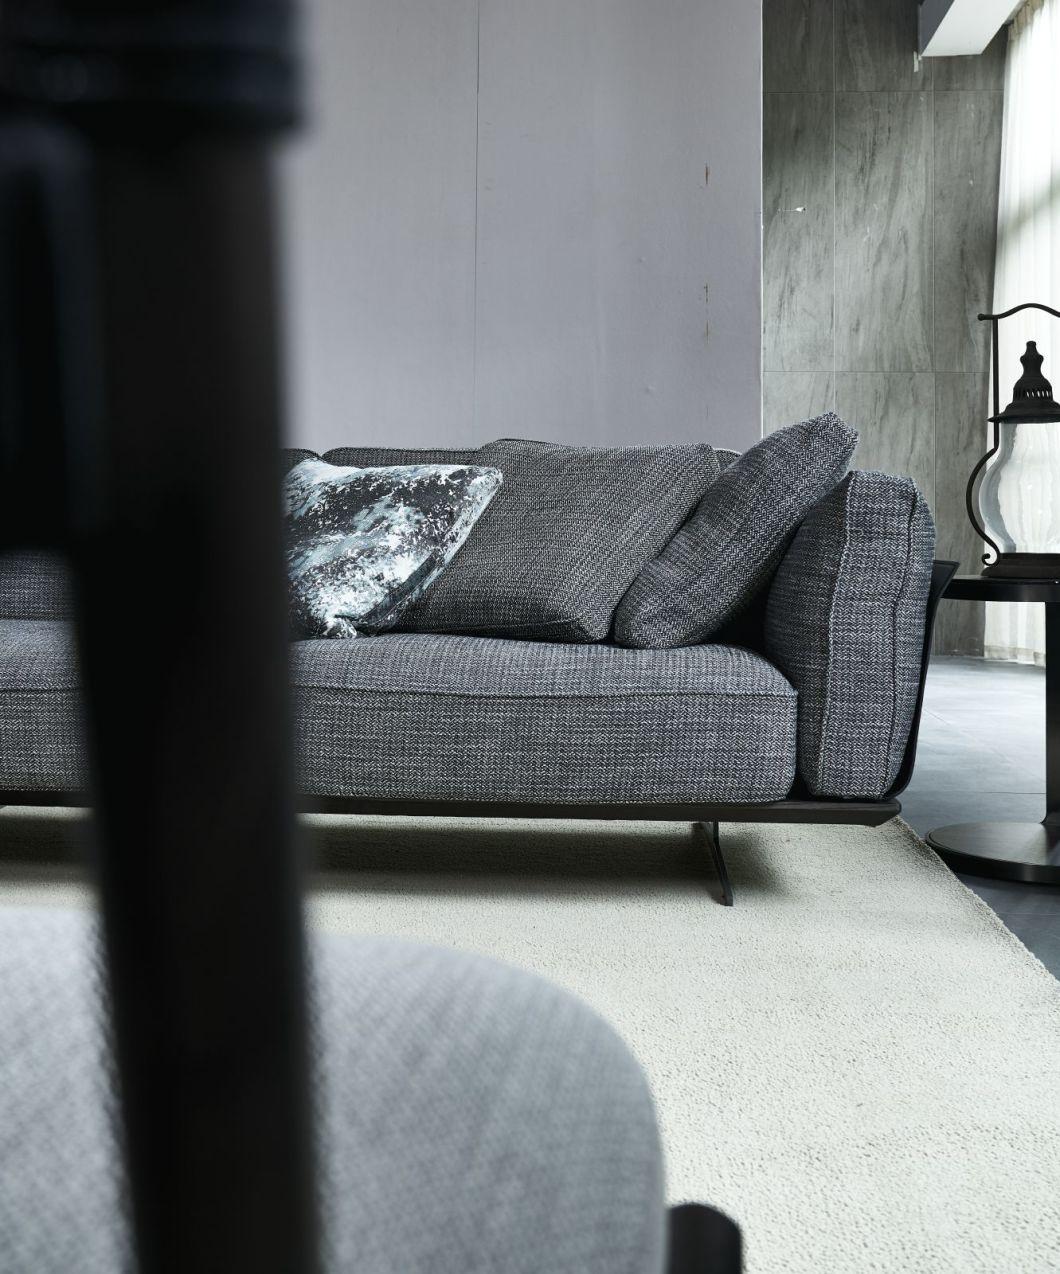 PF99 4 Seater Fabric Sofa, Latest Design Sofas, Italian Modern Design, Living Set in Home and Hotel Furniture Customization